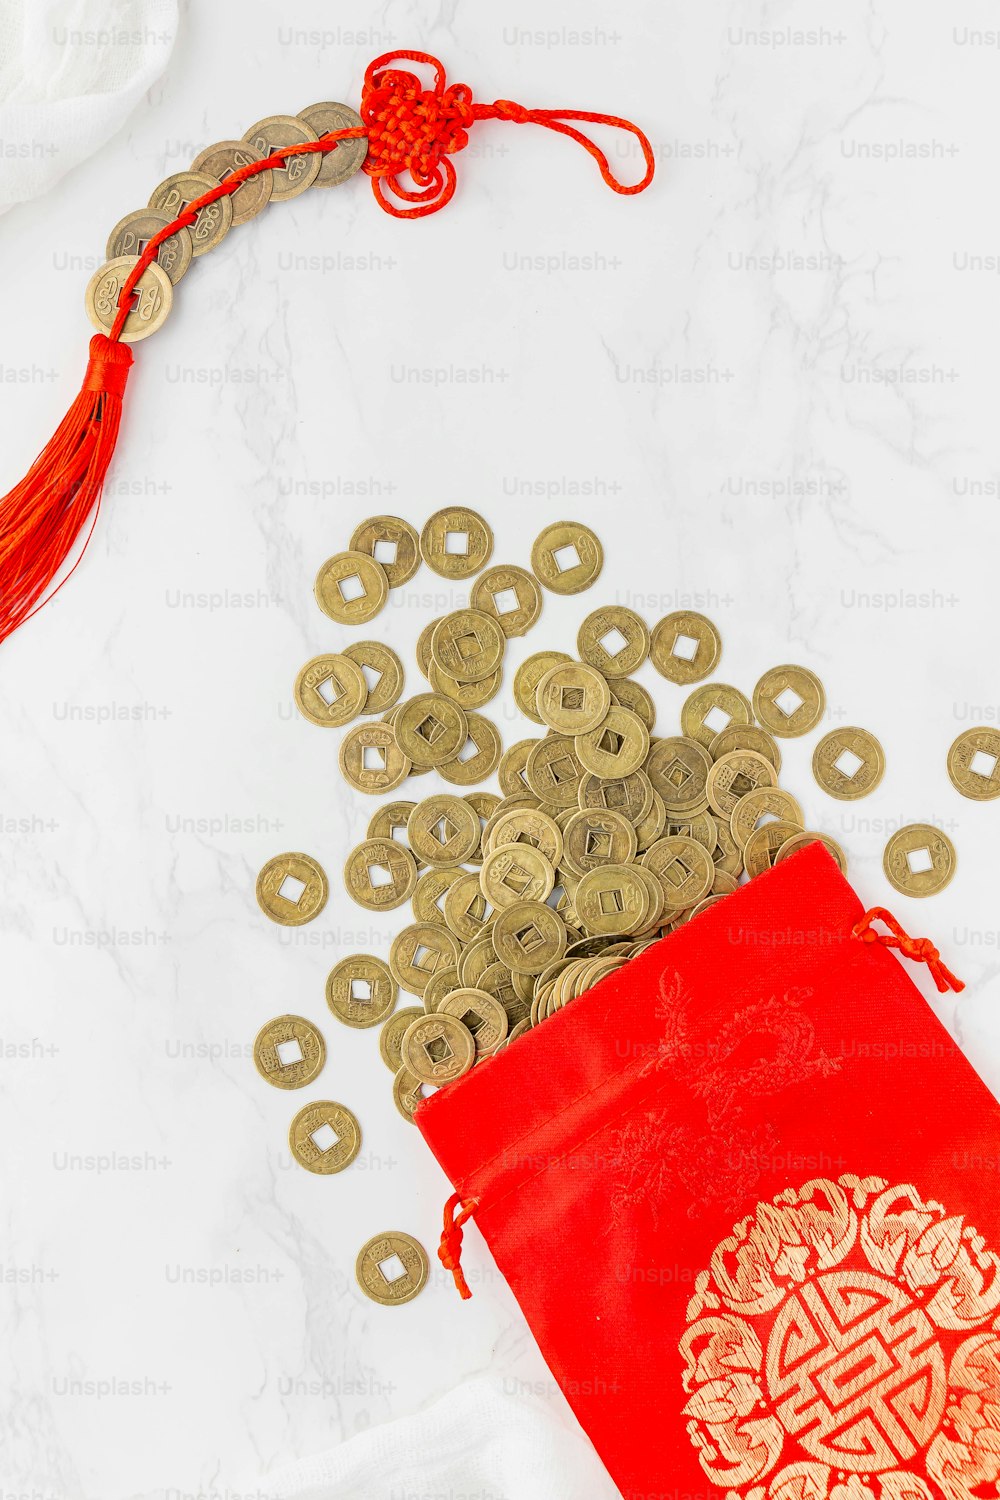 una bolsa roja llena de monedas de oro junto a una bolsa roja llena de monedas de oro